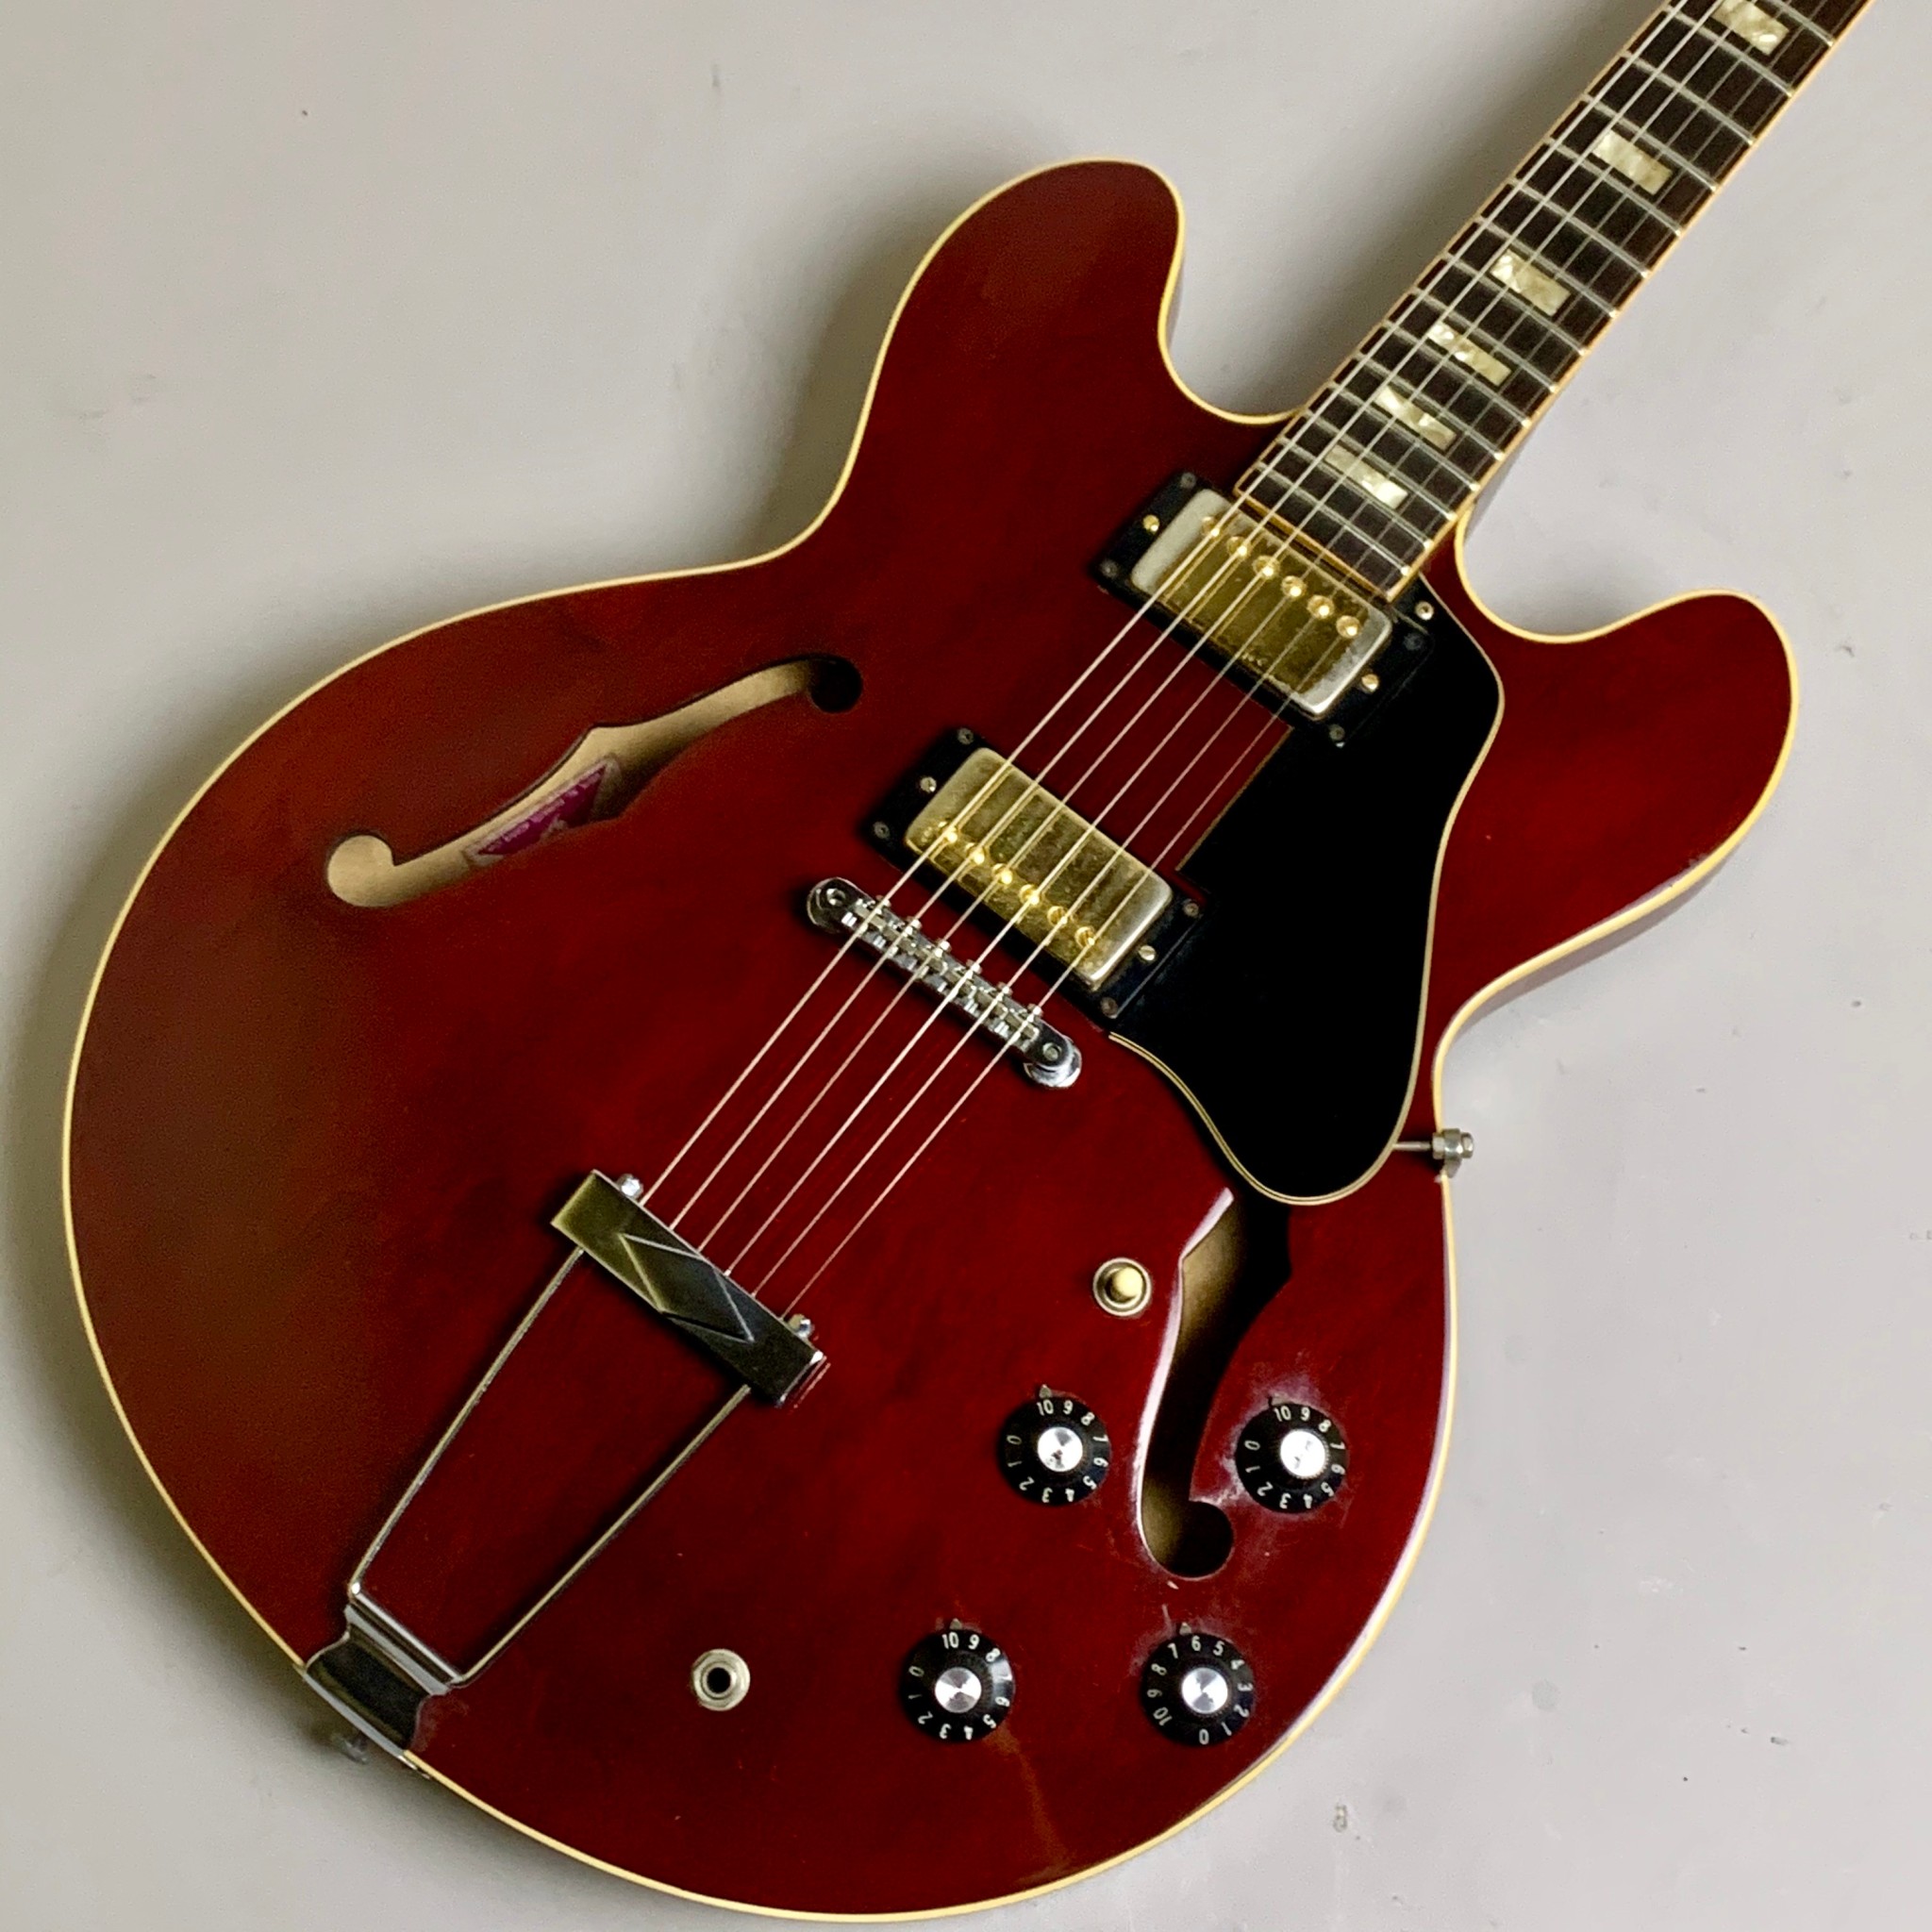 [https://www.digimart.net/cat01/shop5122/DS06546793/::title=] *1974年製 Gibson ES-335TD Cherry ボディトップです。Original Cherry Finish。鮮烈な赤！というわけではなく濃い目のCherryカ […]